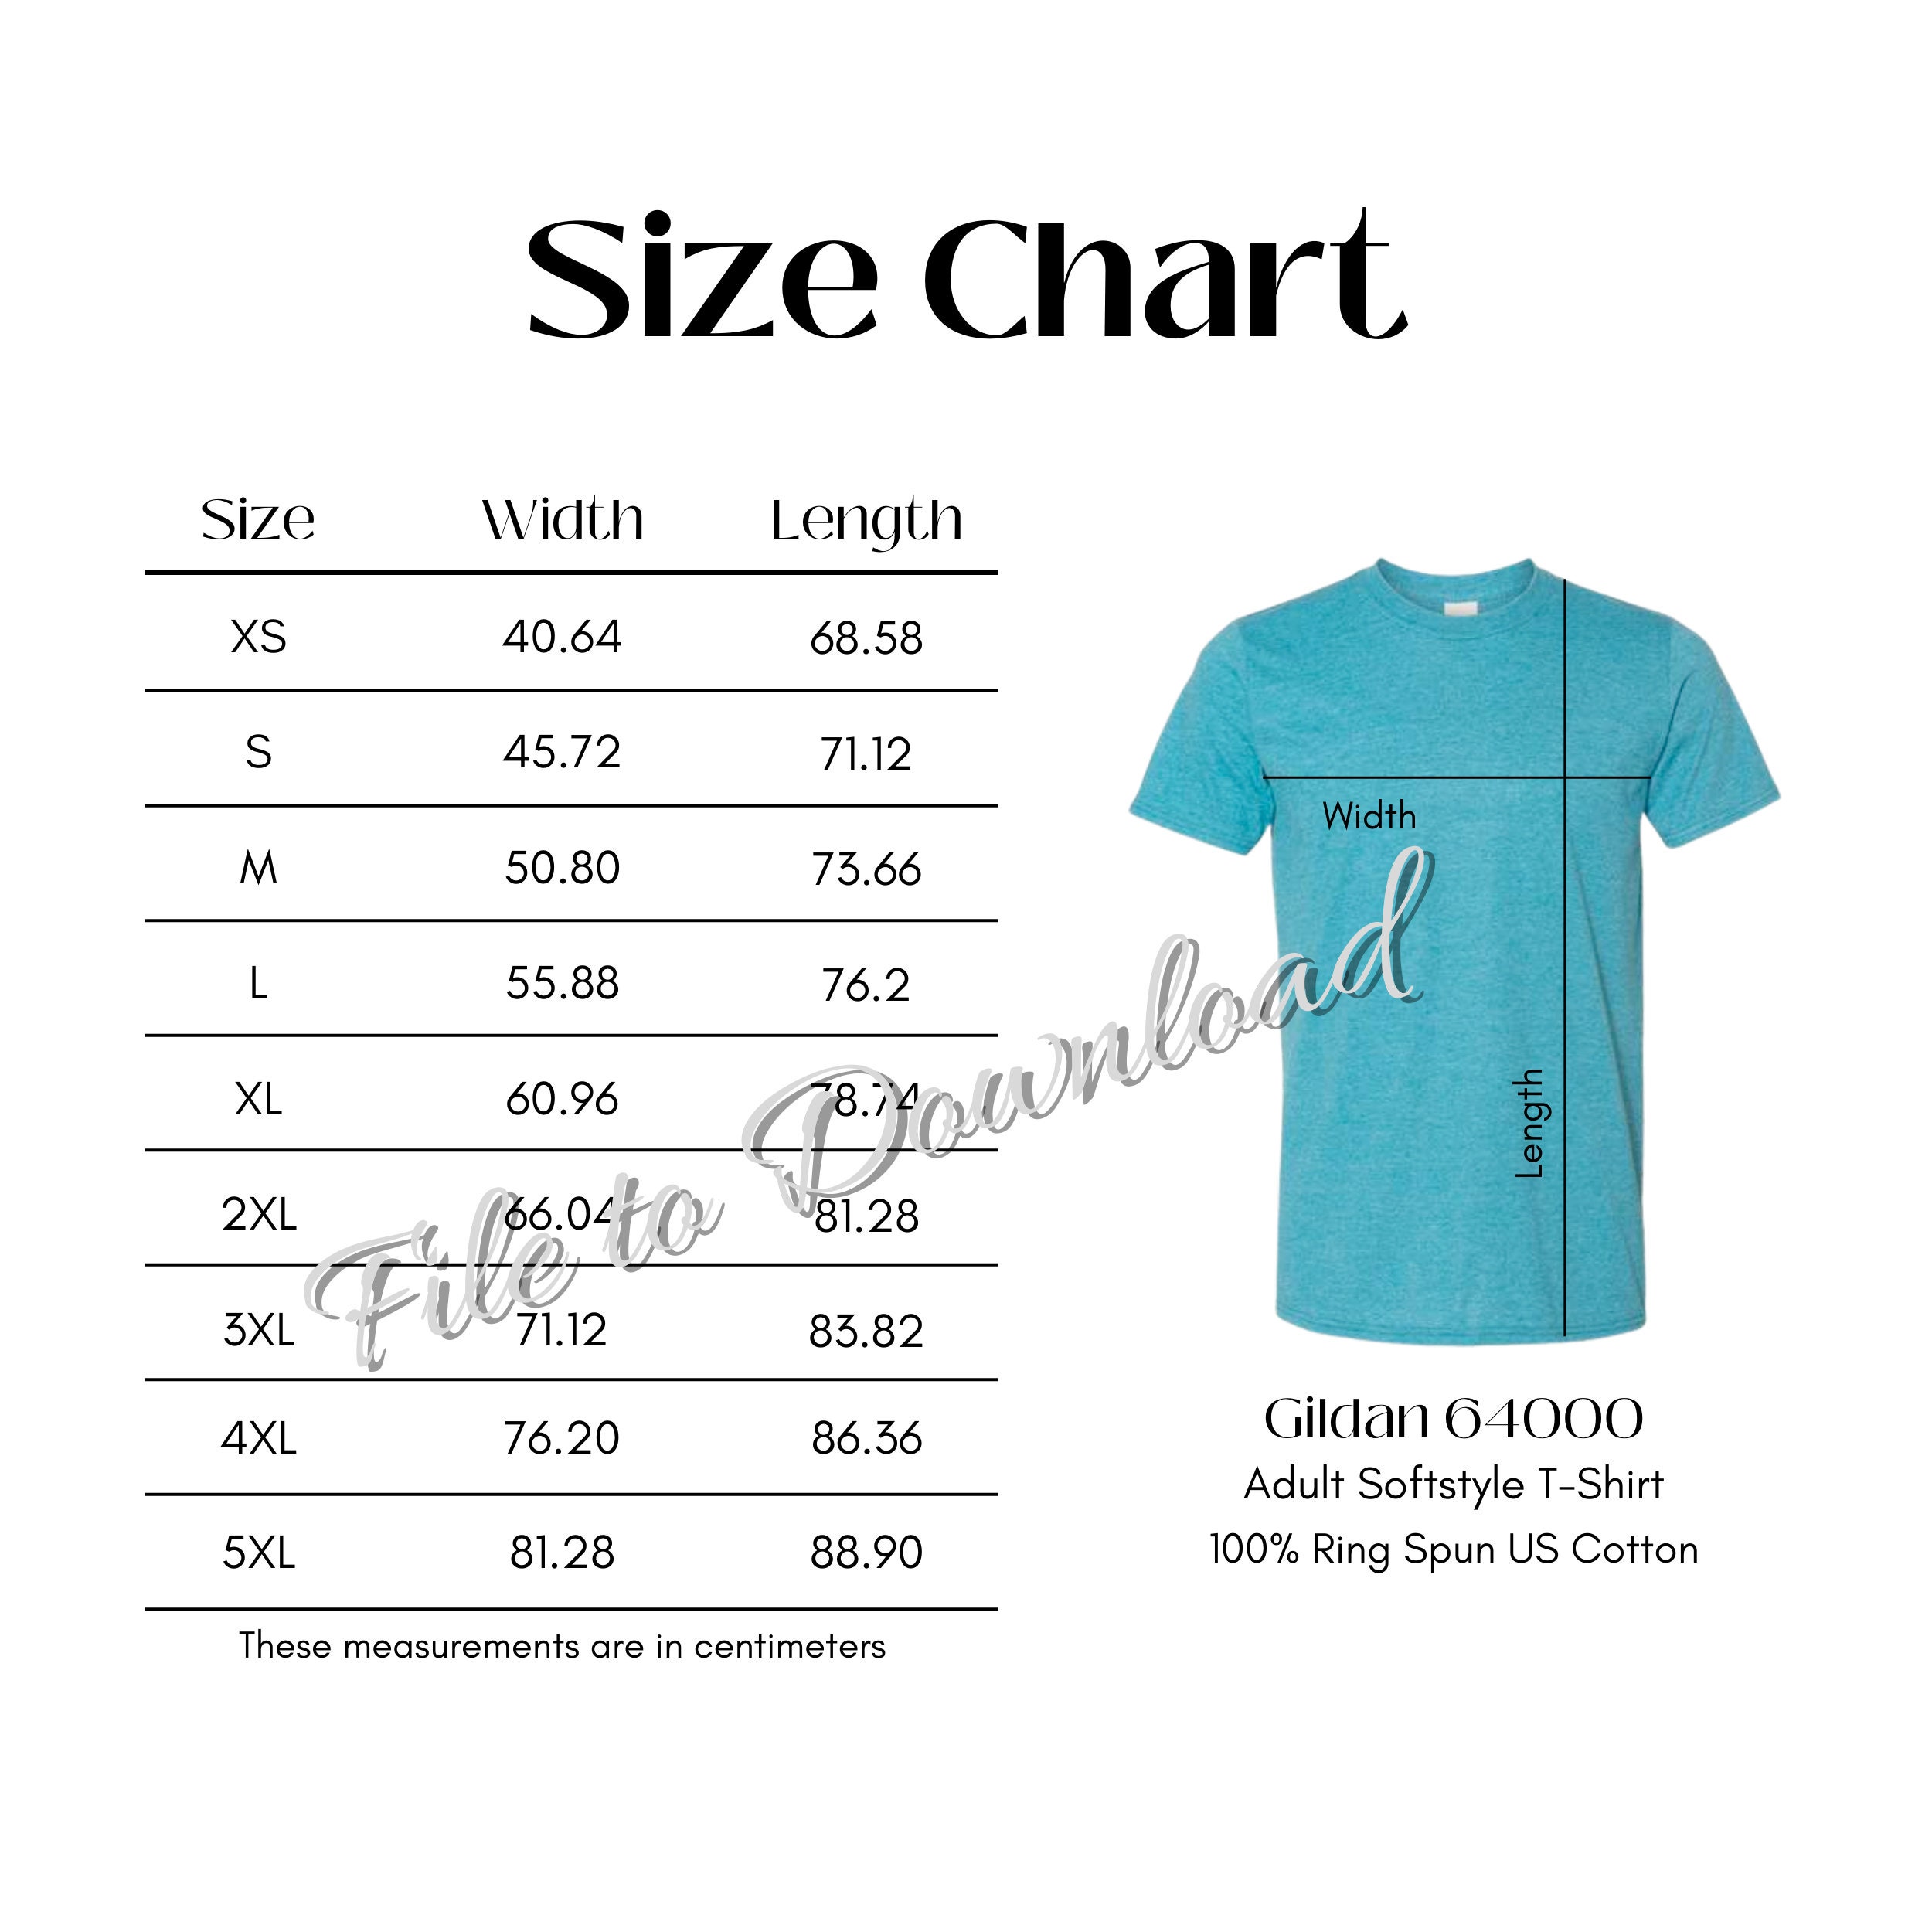 Gildan 64000 Size Chart G640 Softstyle T-shirt Size Guide - Etsy